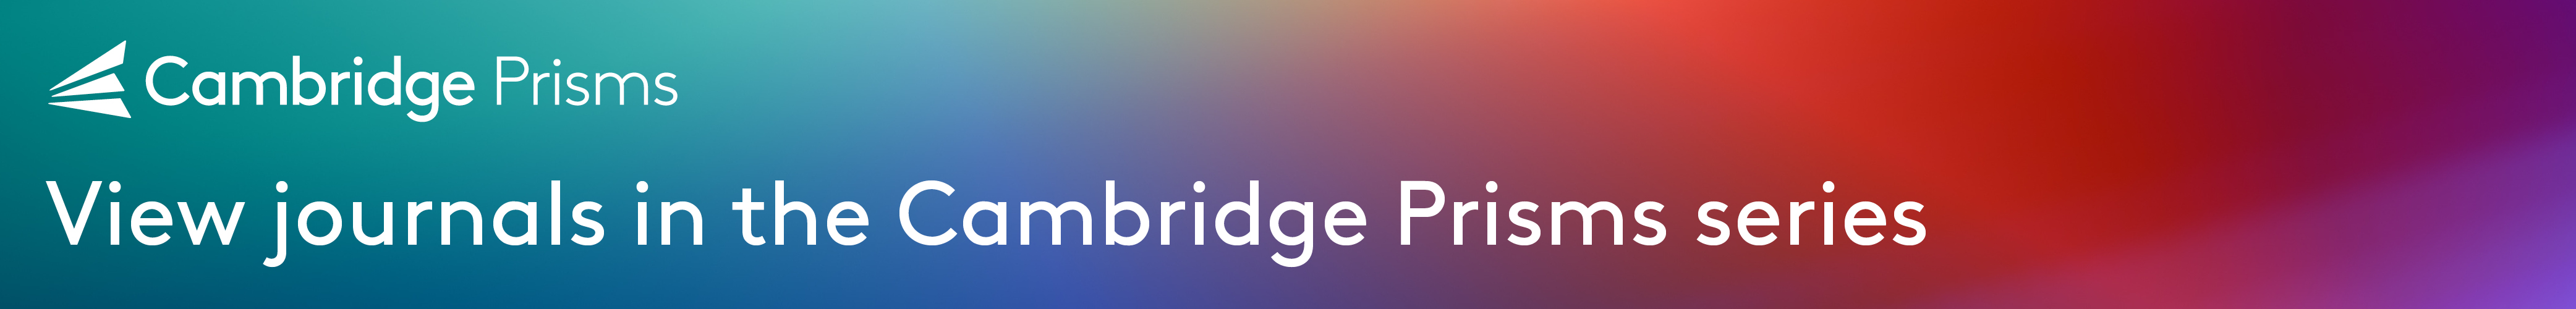 Cambridge Prisms Collection Banner